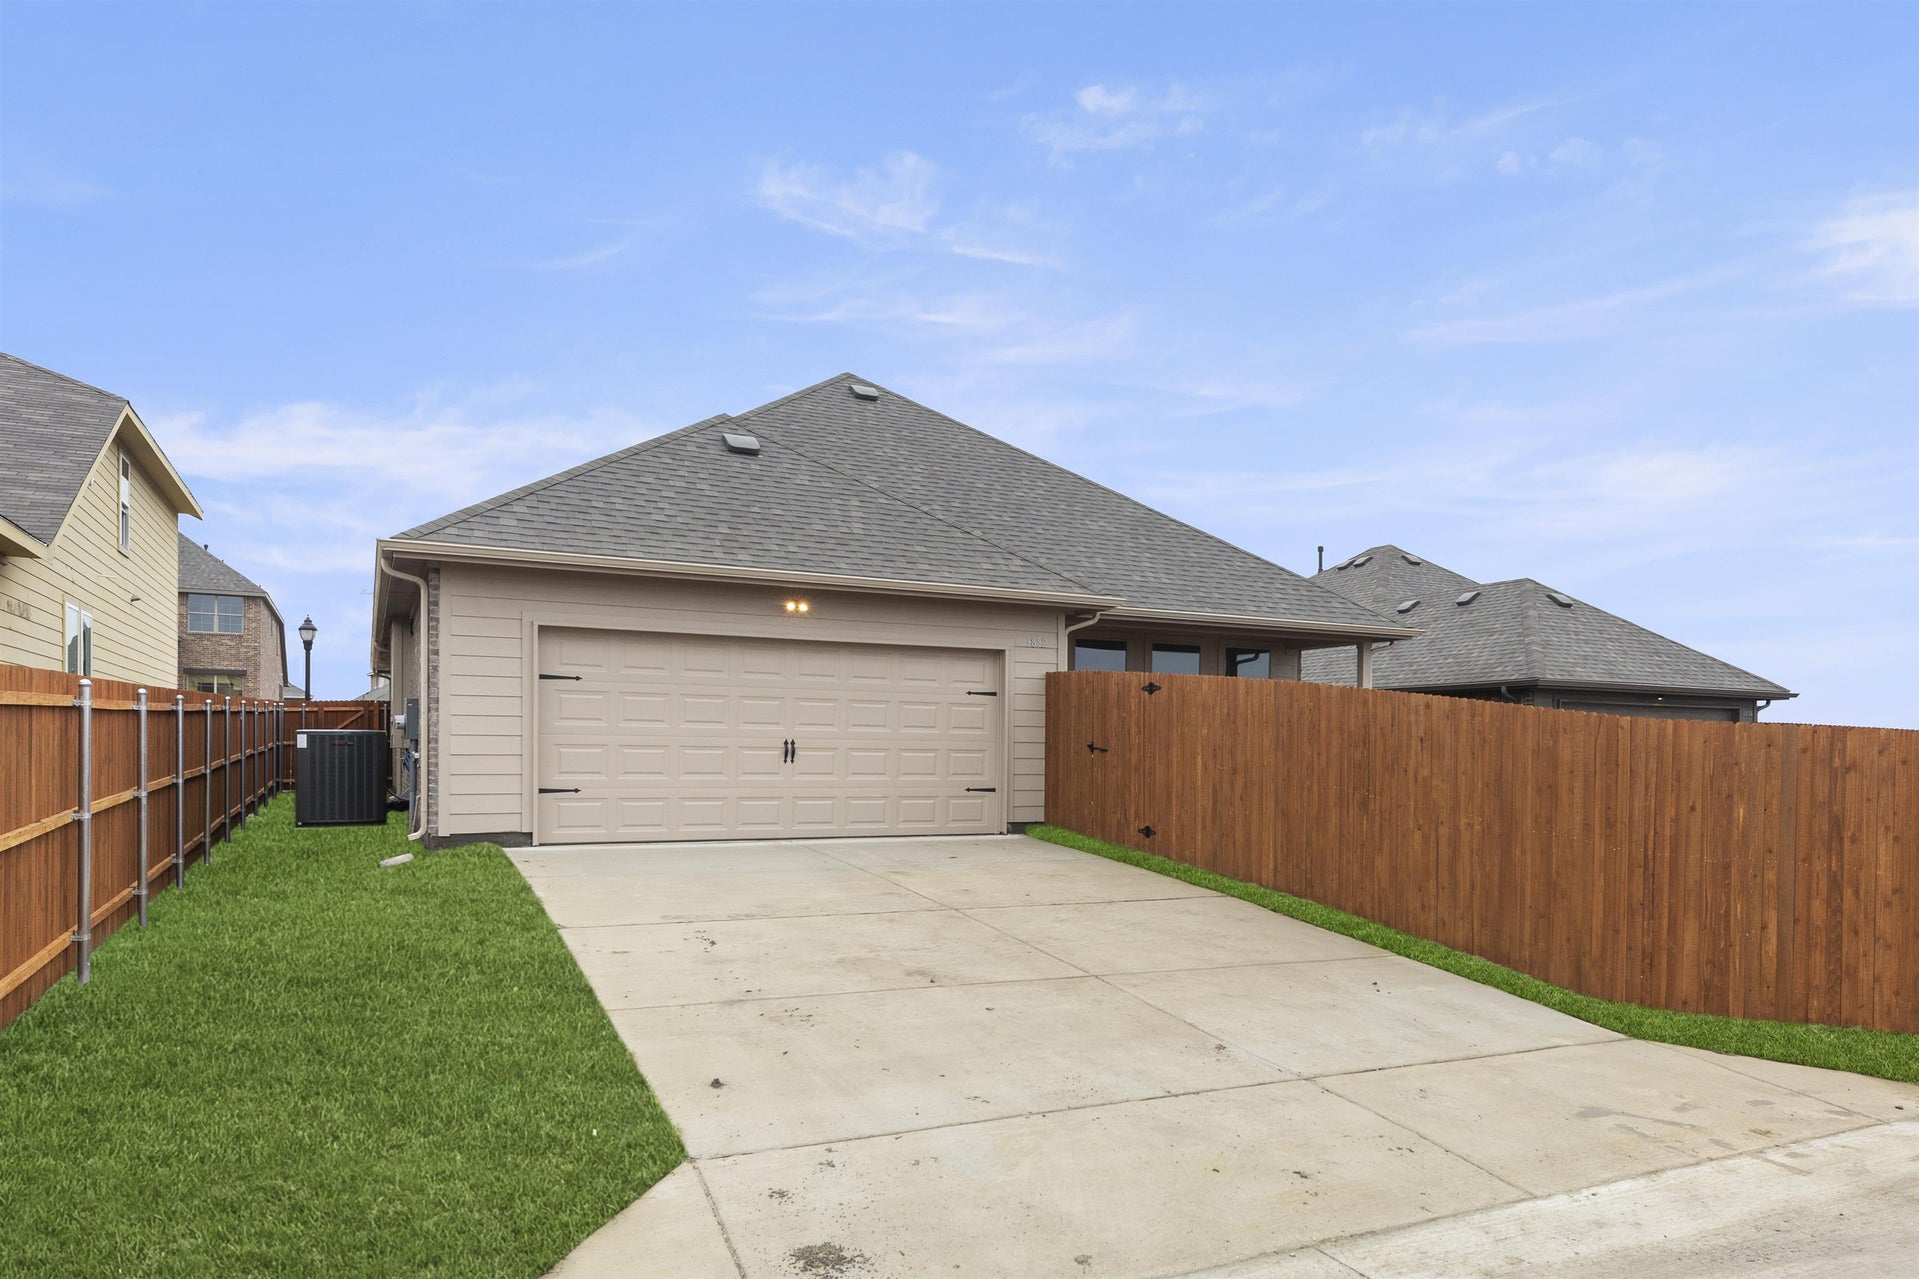 2,129sf New Home in Heartland, TX